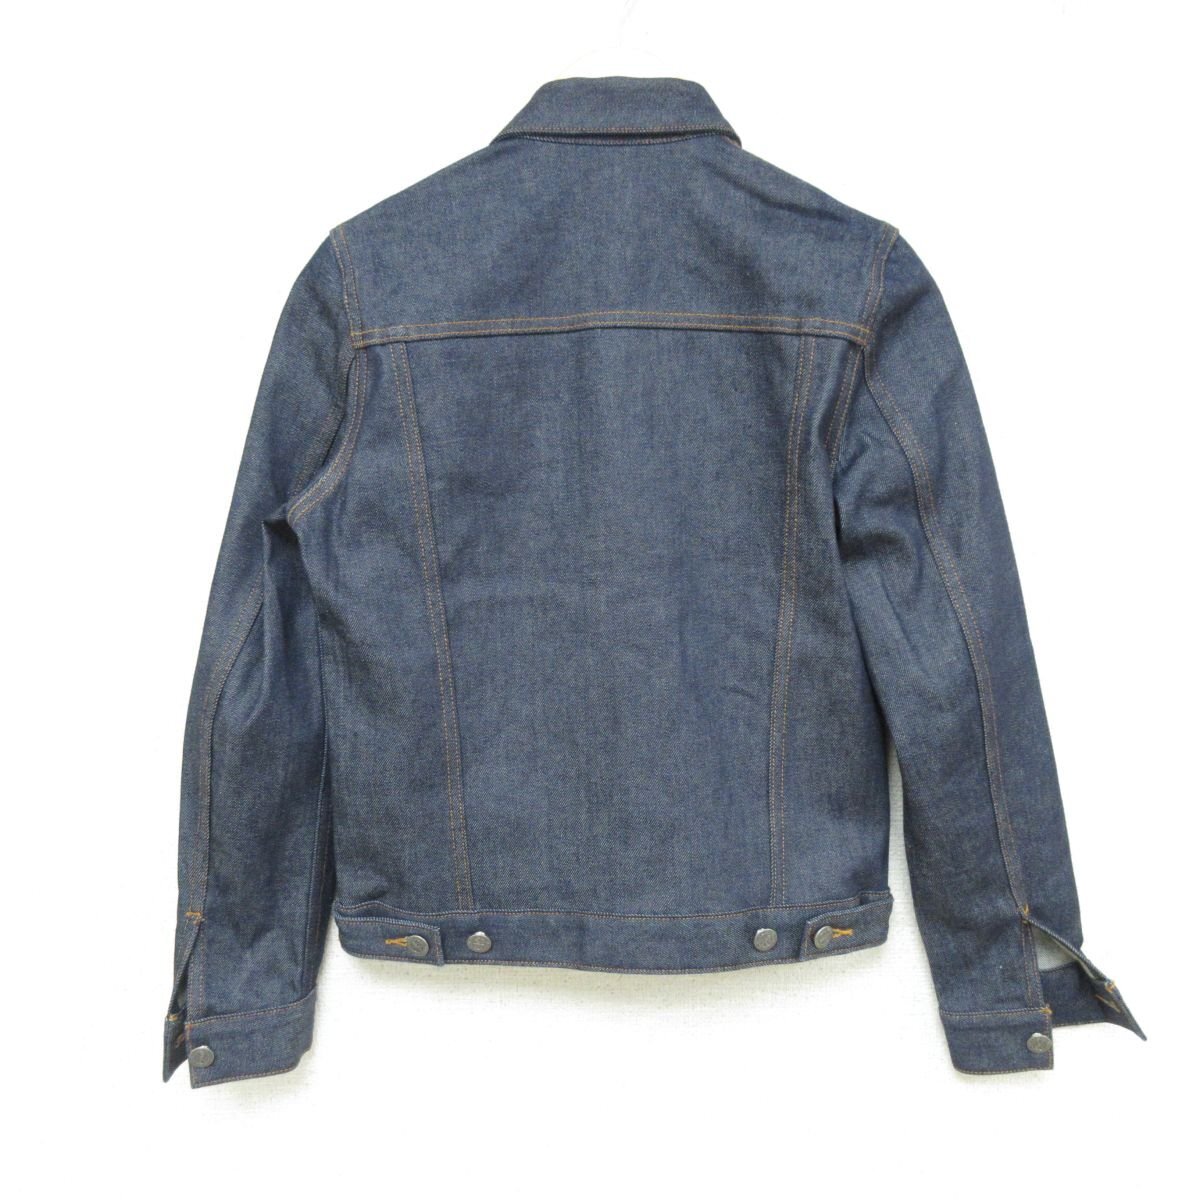  as good as new A.P.C. A.P.C. non woshu Denim jacket Tracker jacket G Jean XS indigo *